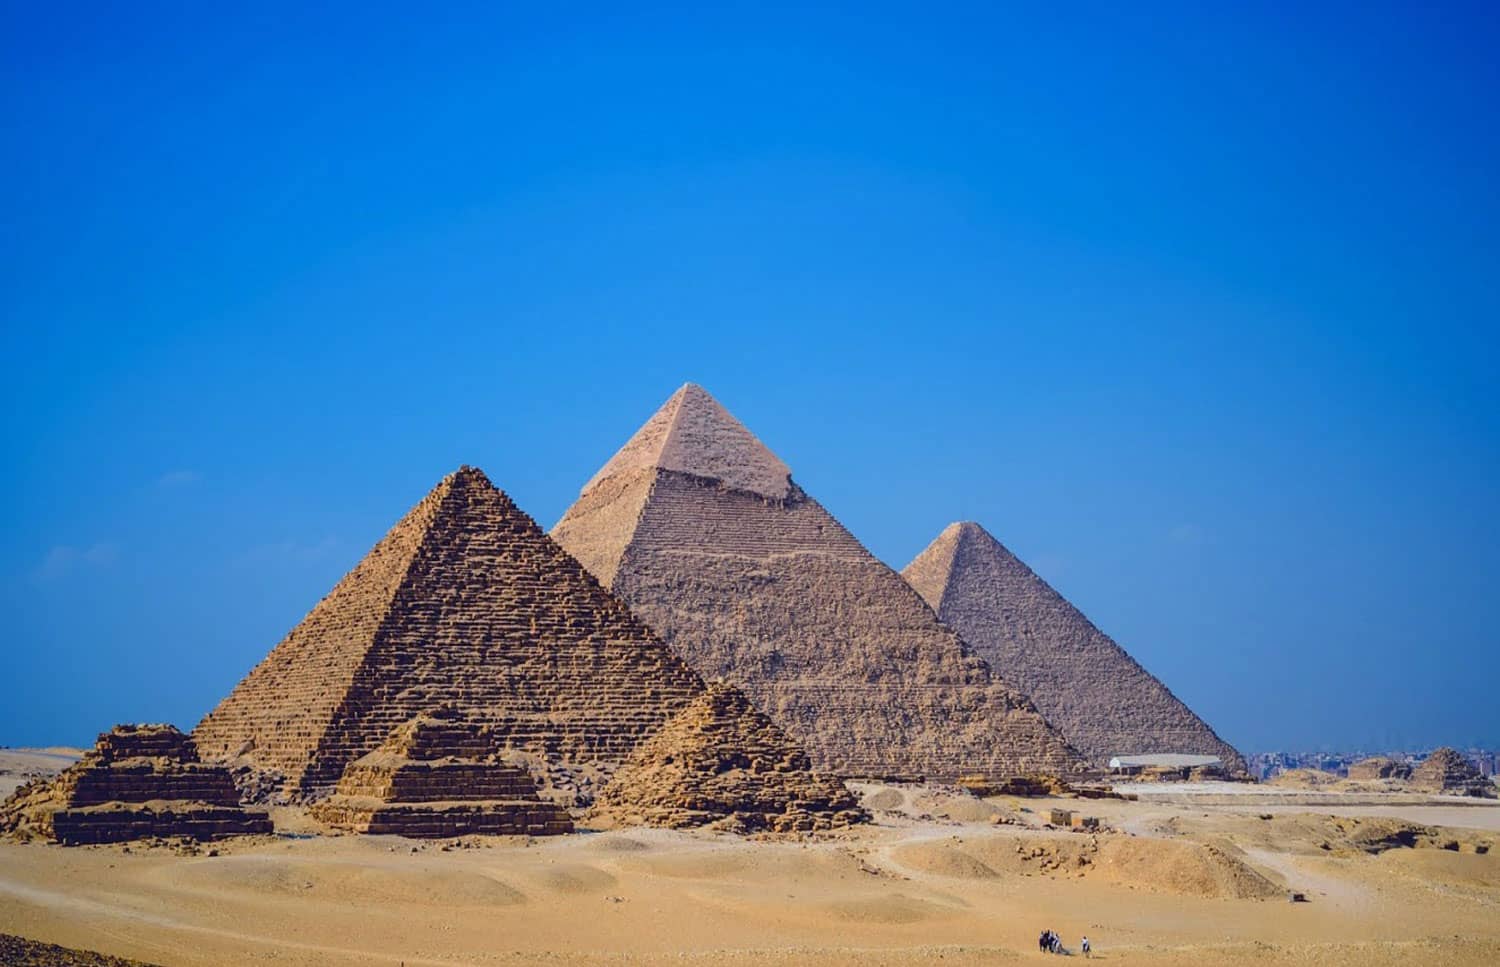 egypt, pyramids, sphinxes, ეგვიპტე, პირამიდა, სფინქსი,